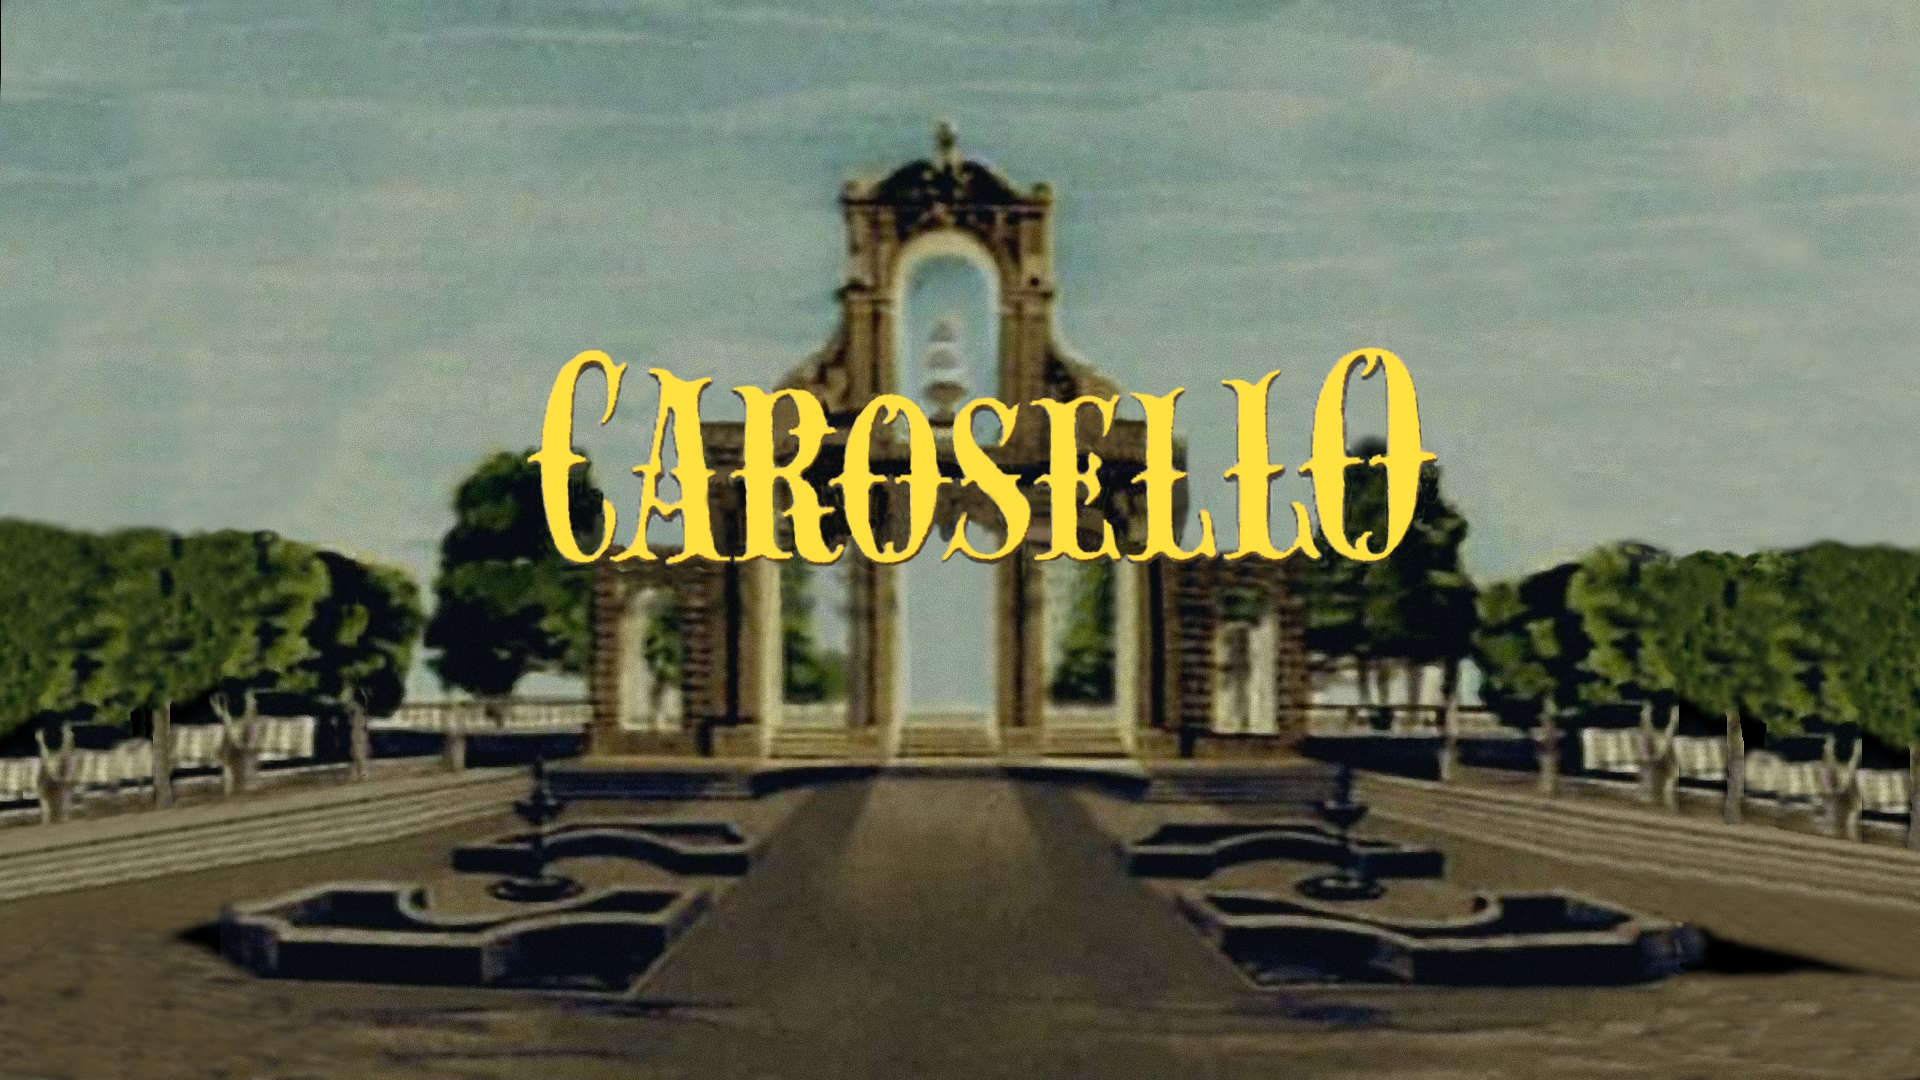 Carosello_1920_1080.jpg